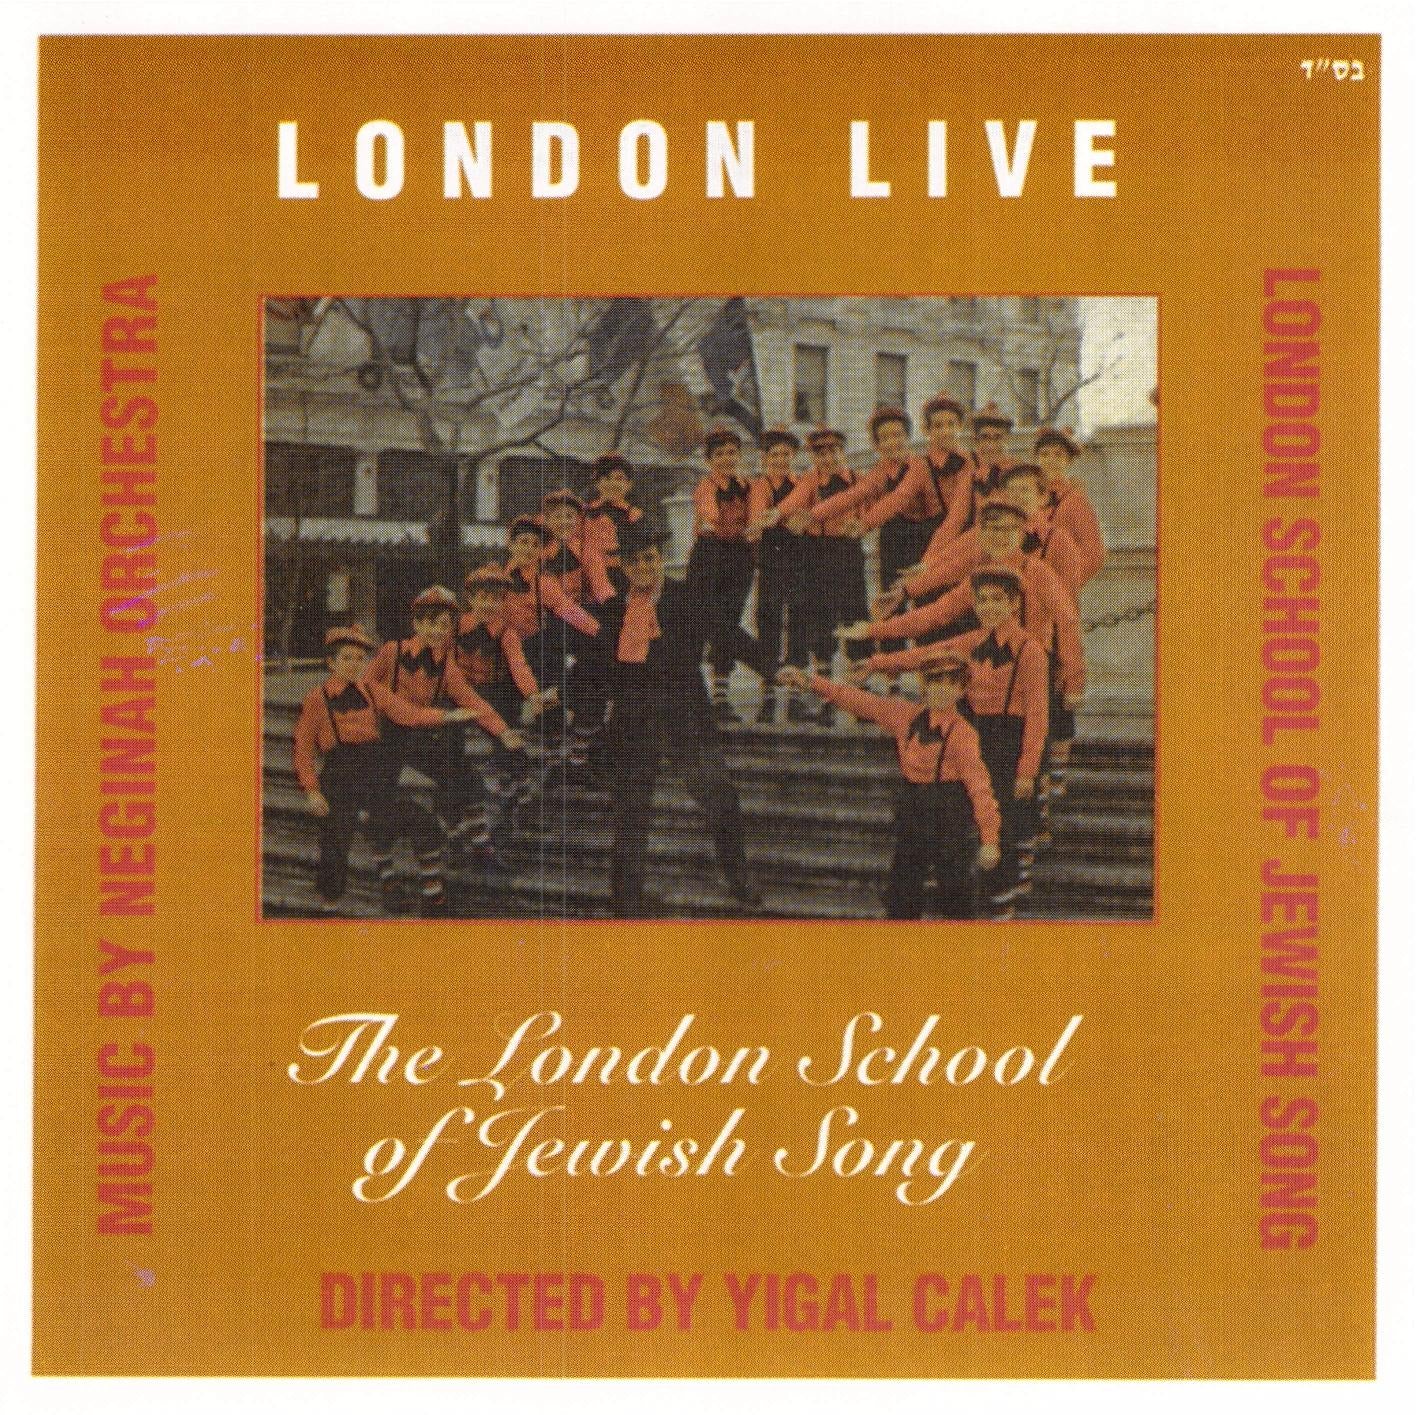 Yigal Calek & The London Choir - London Live